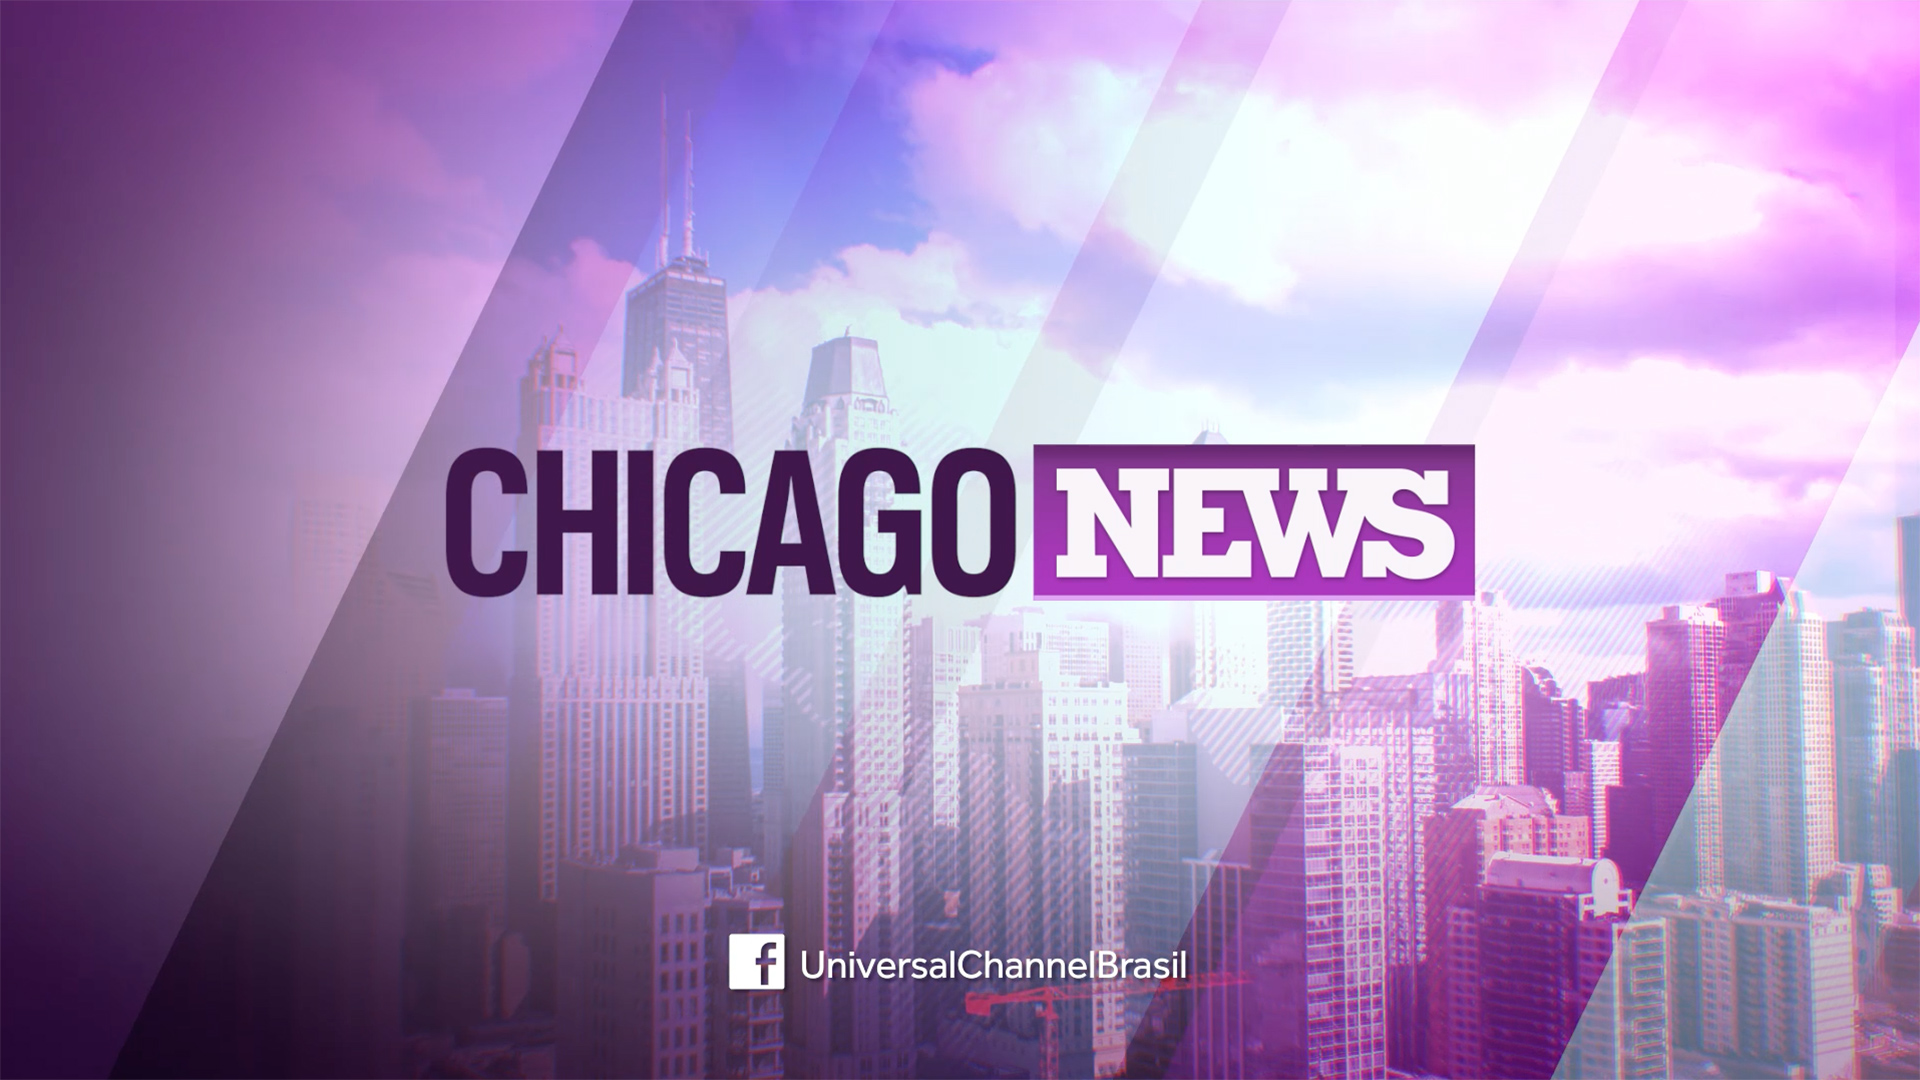 CHICAGO NEWS • VIDEO CASE